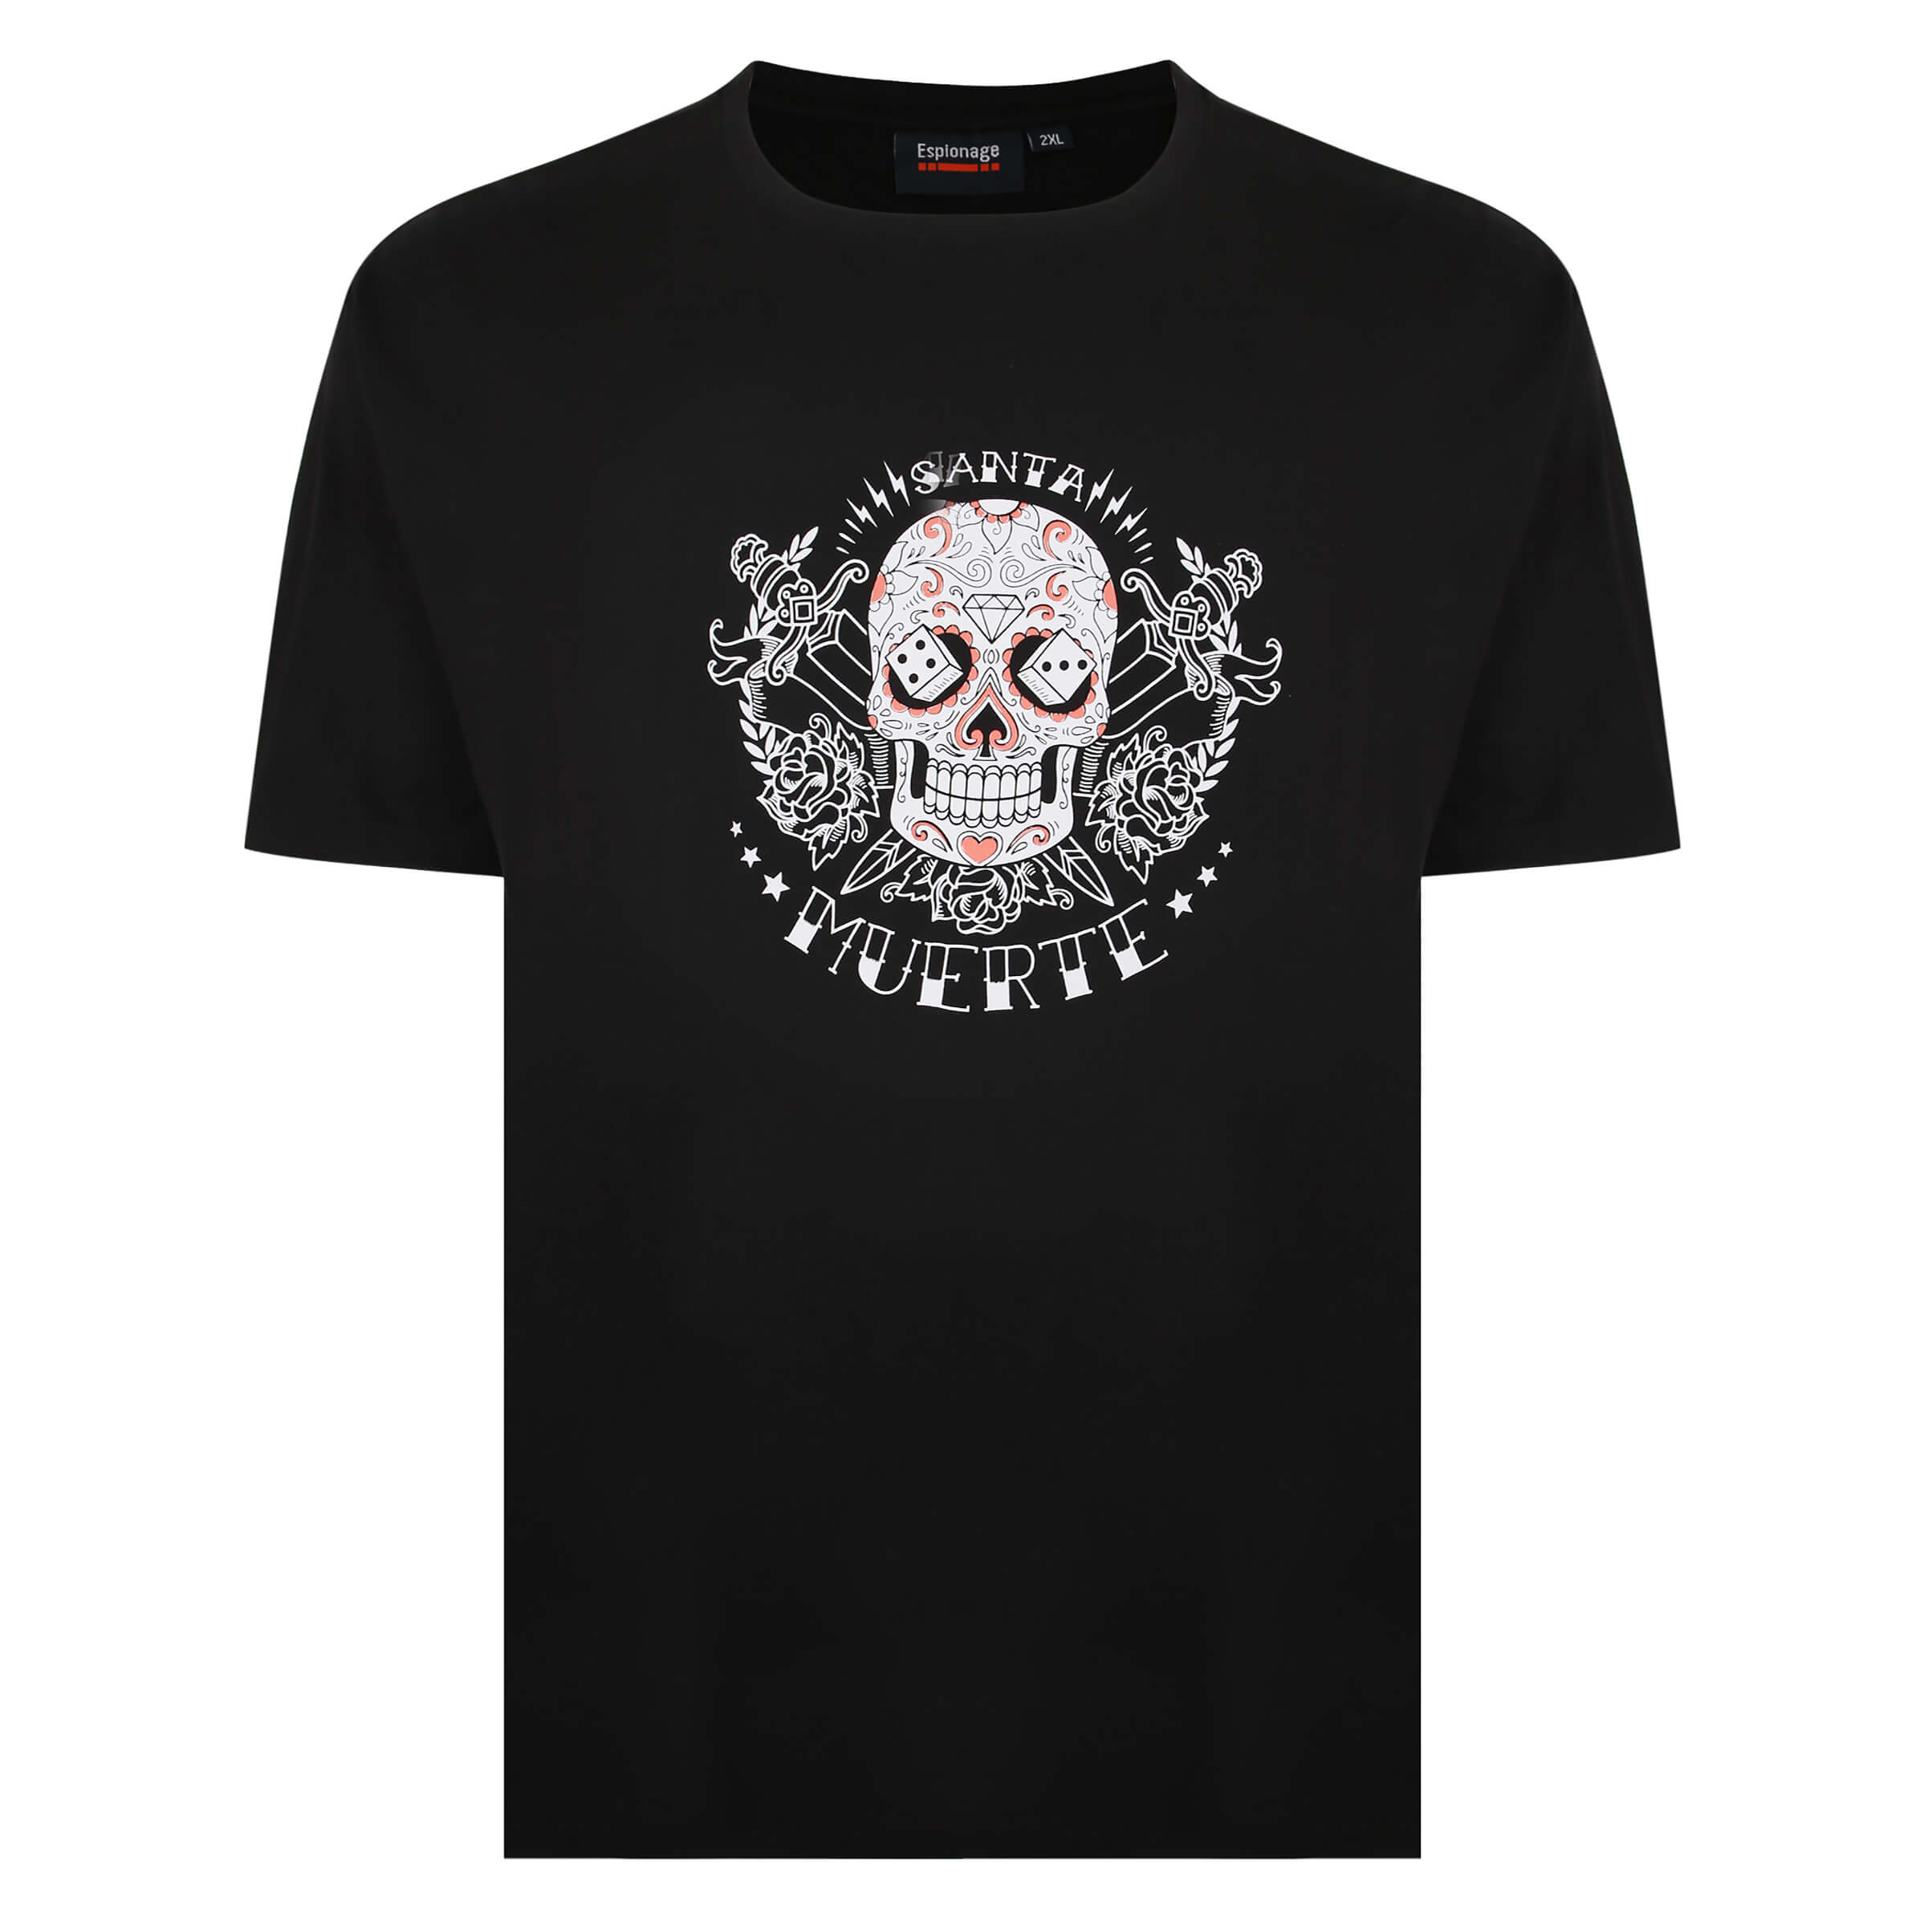 Espionage Black Themed Tee Shirt